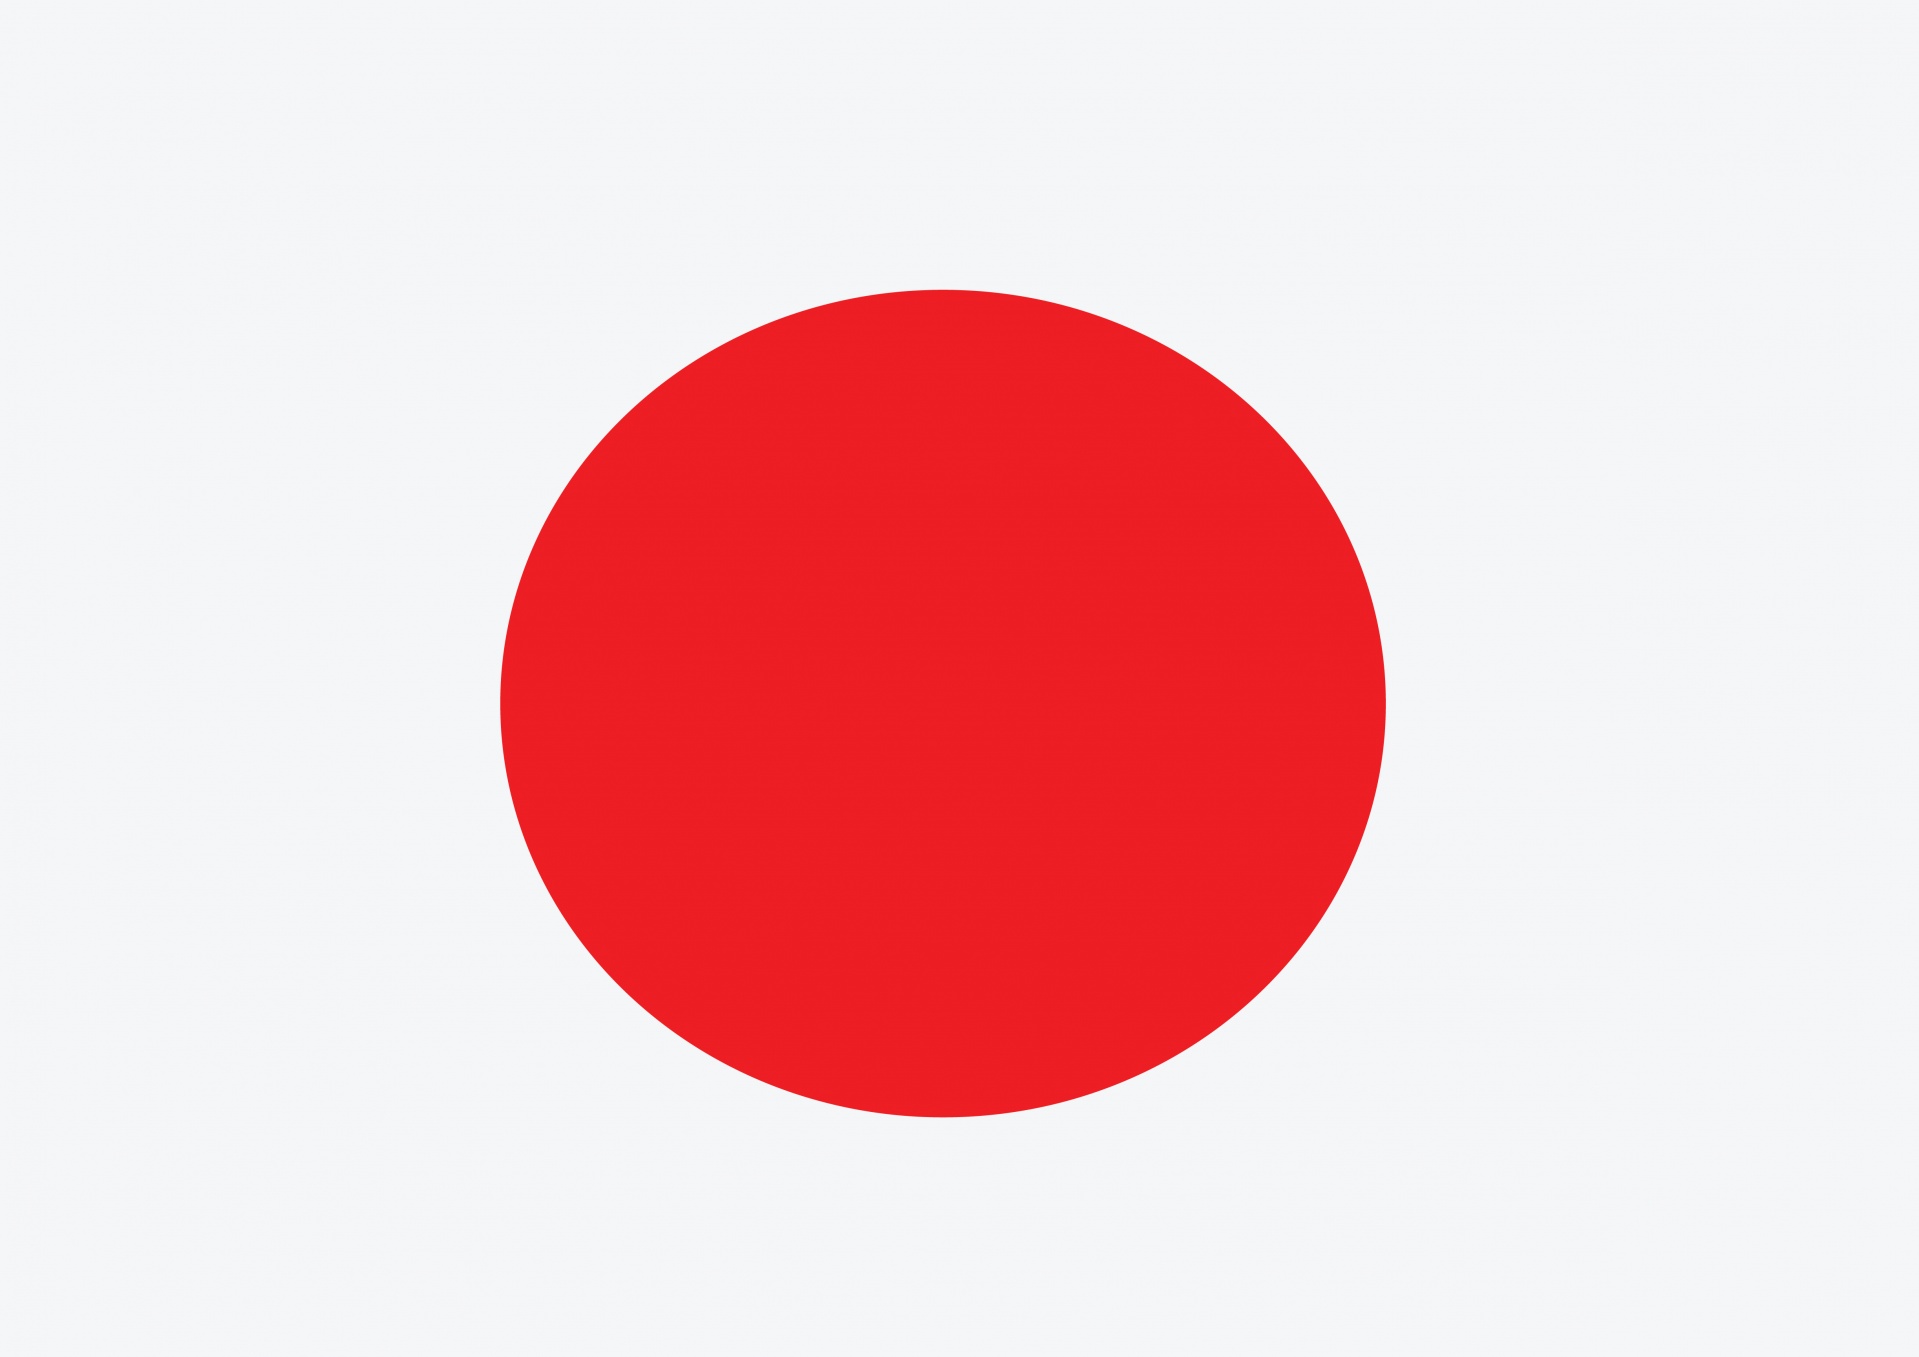 National Flag Of Japan Themes